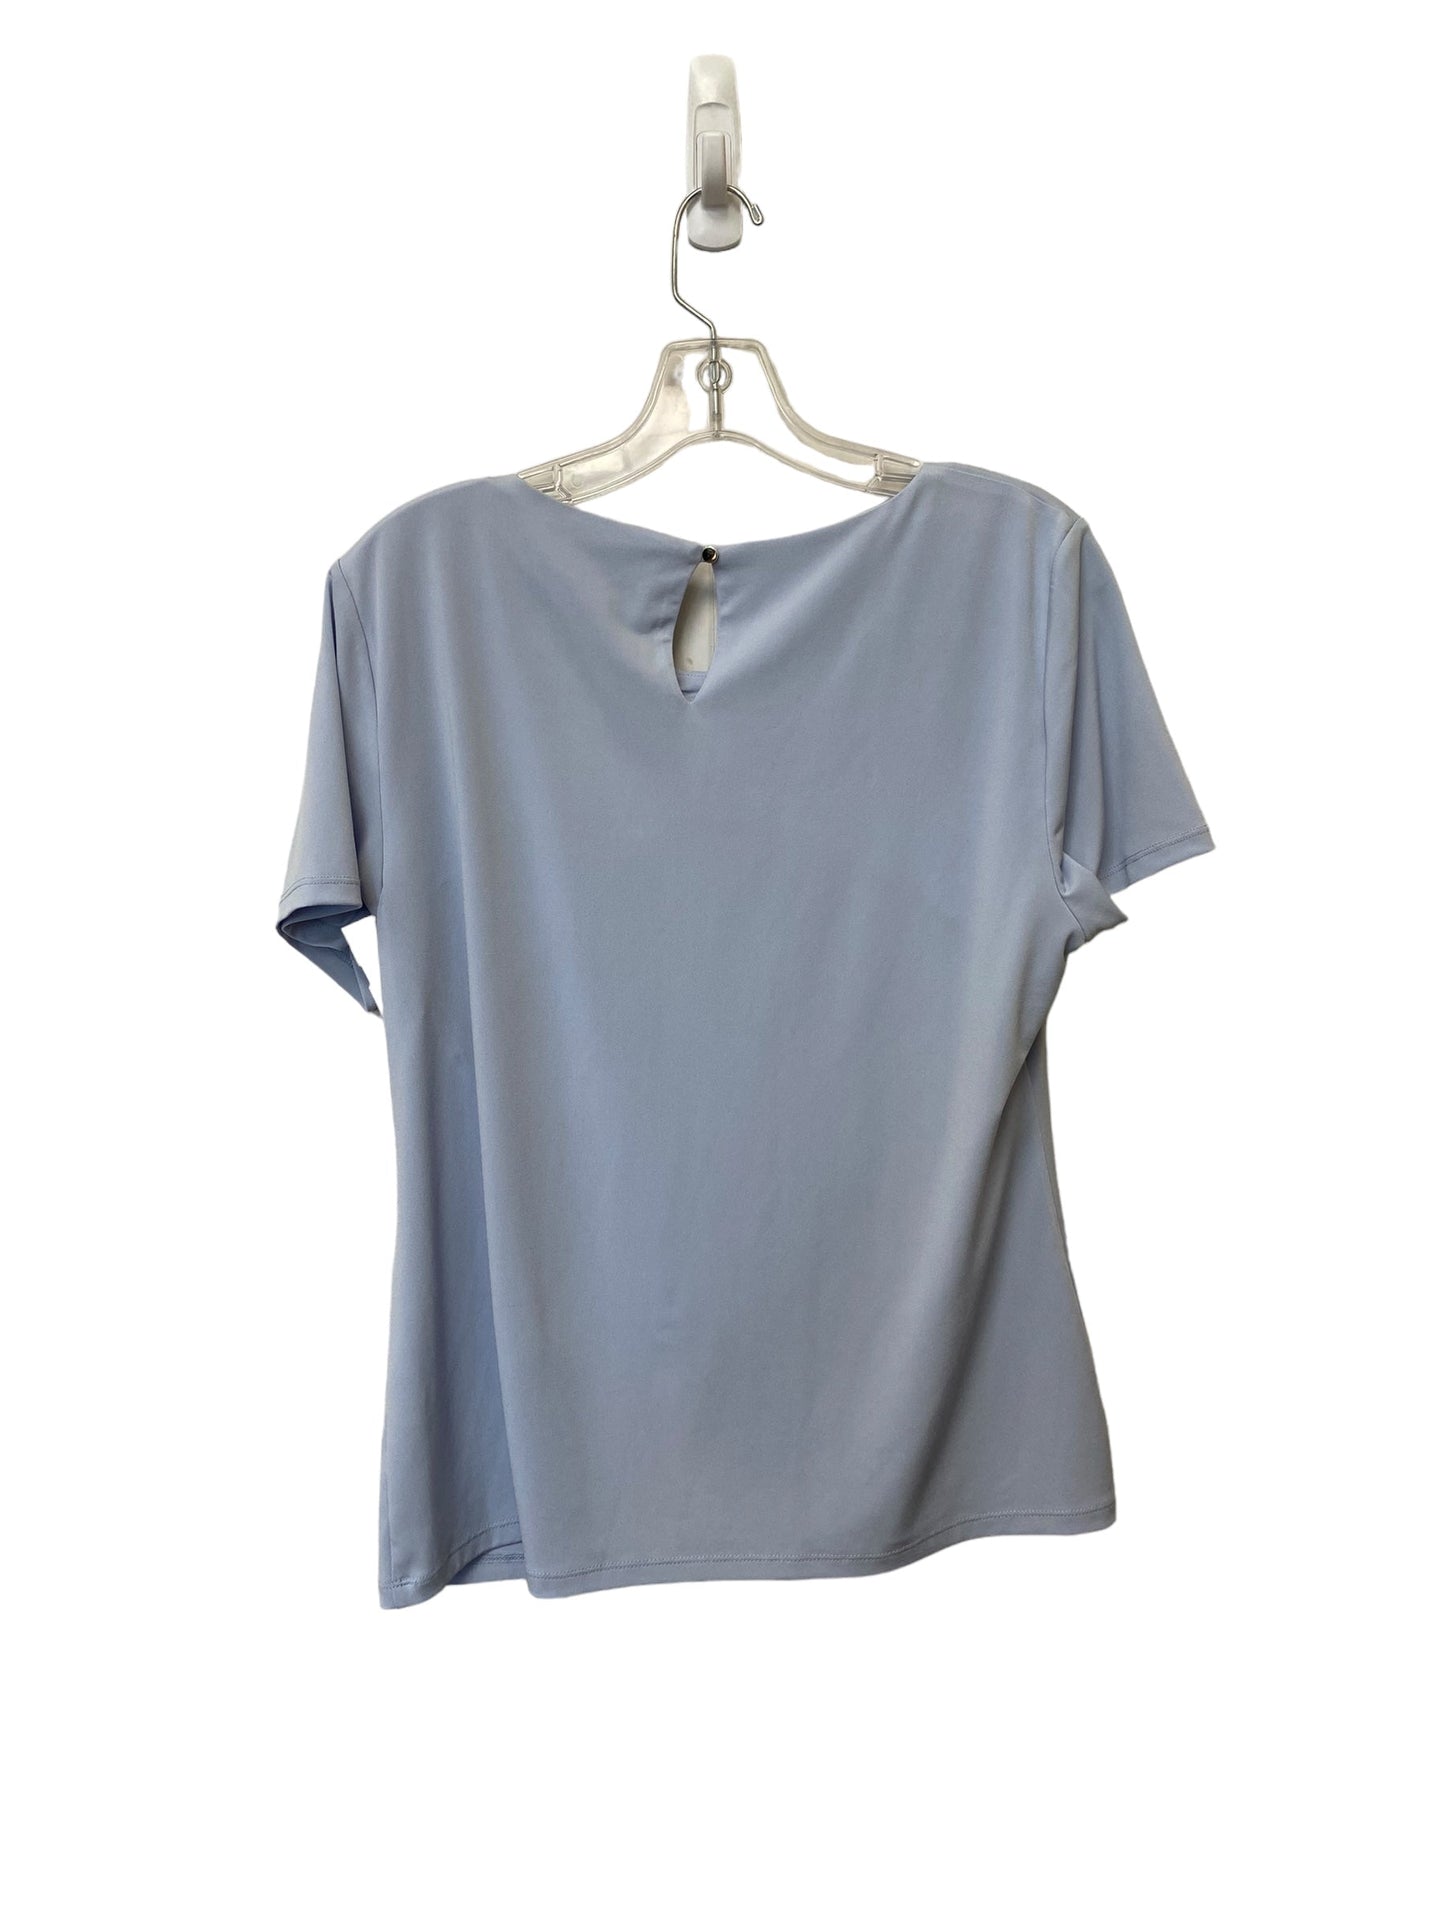 Blue Top Short Sleeve Calvin Klein, Size Xl